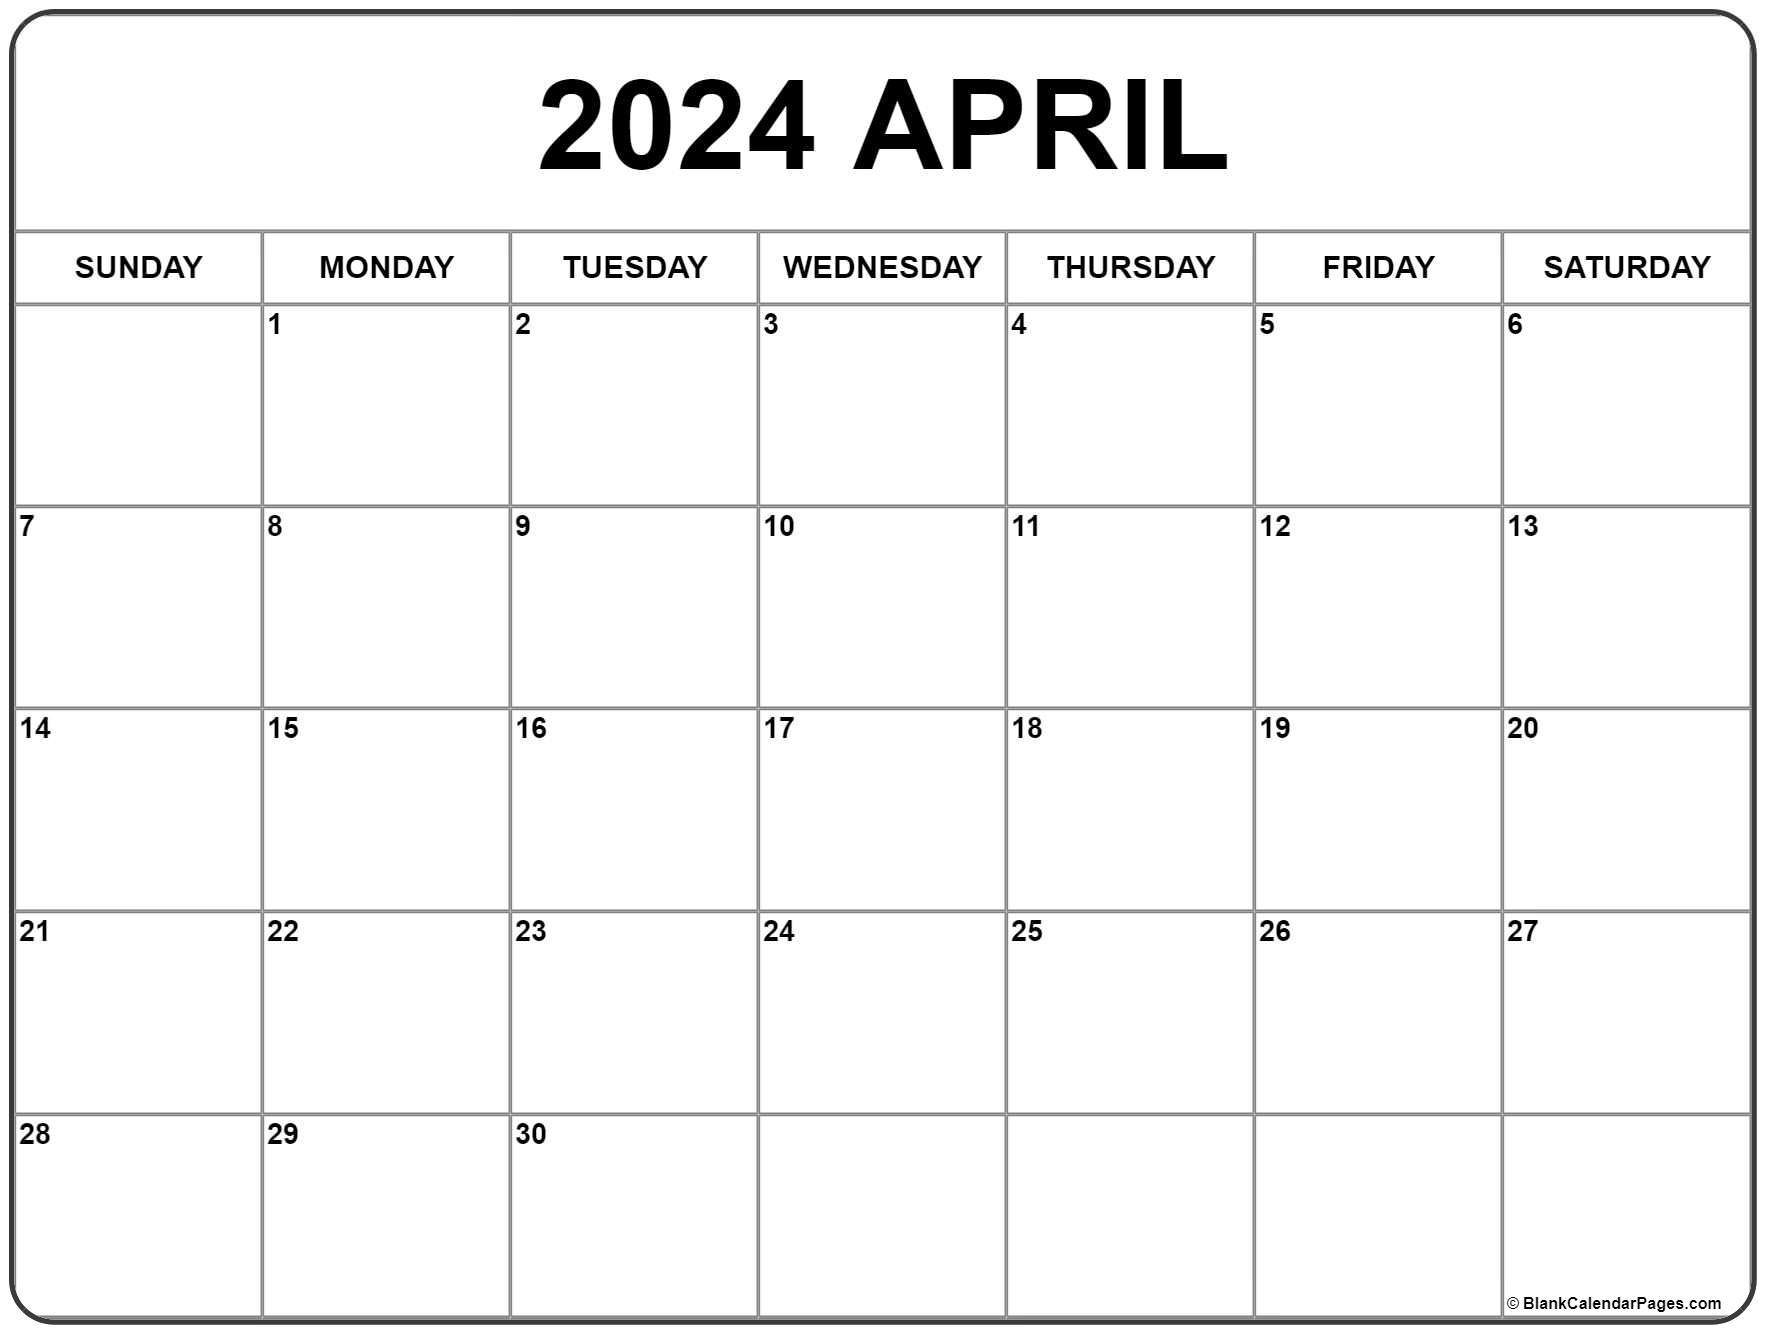 March April 2022 Calendar Printable April 2022 Calendar | Free Printable Calendar Templates